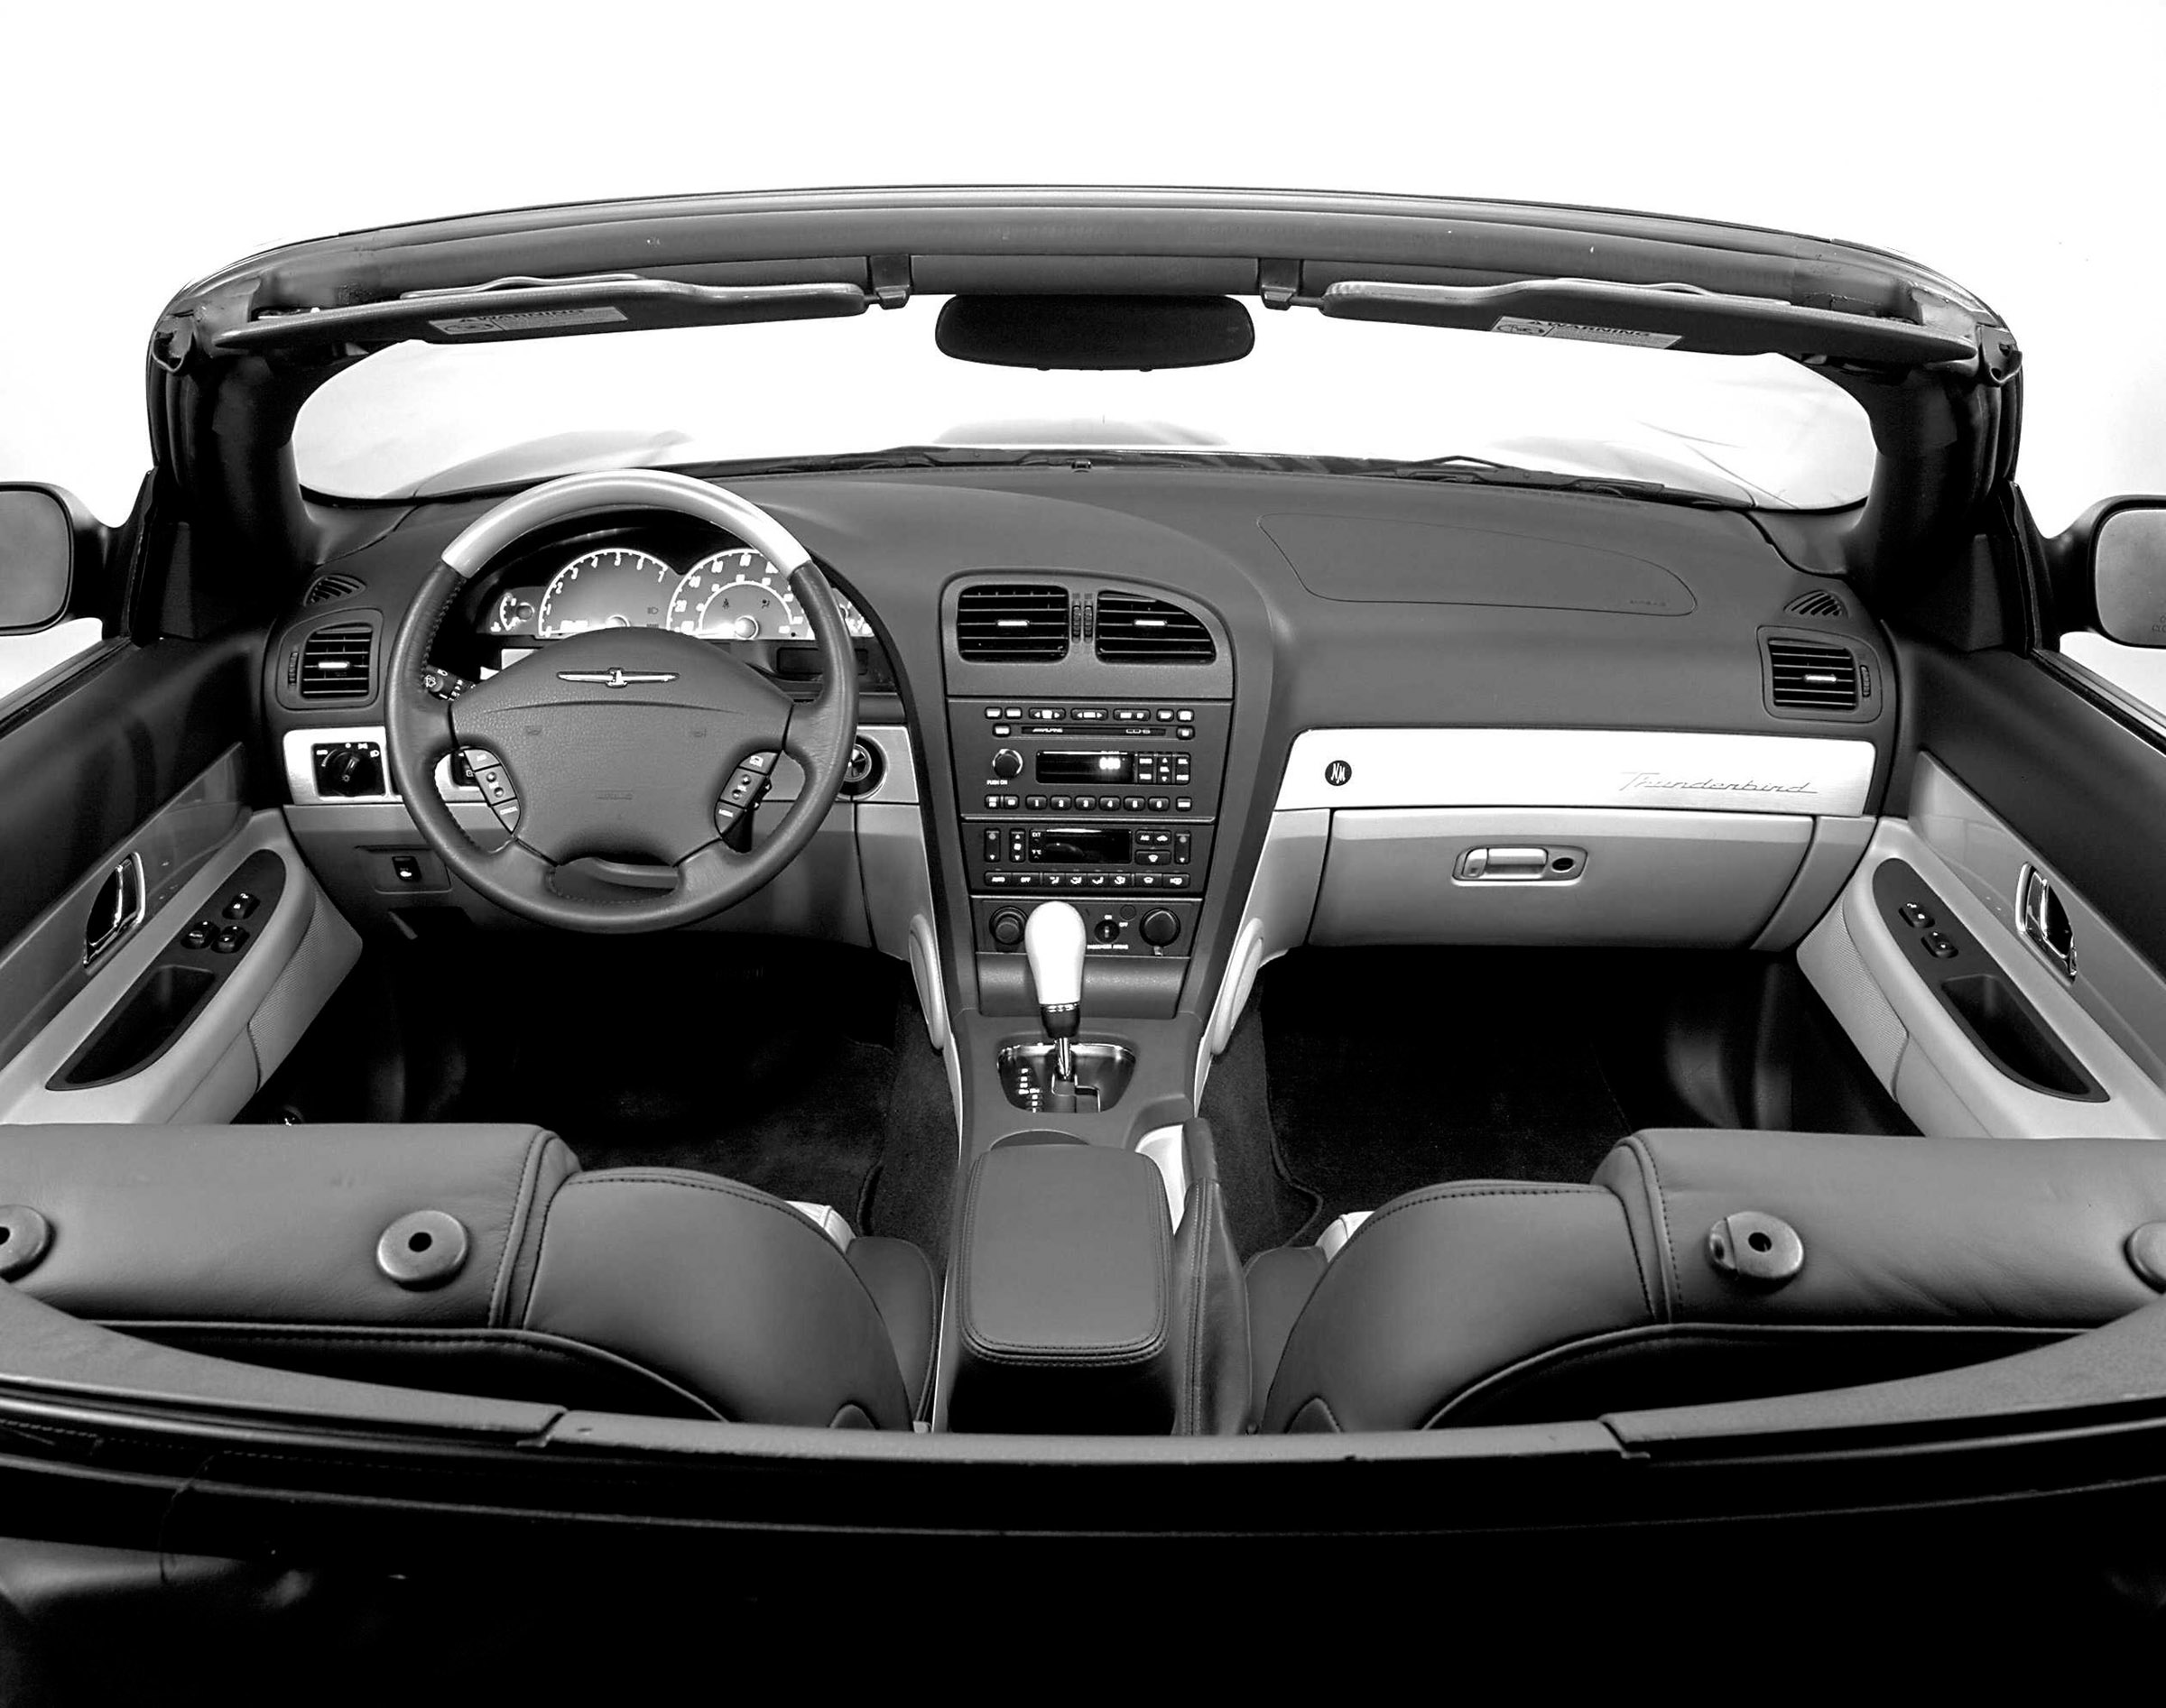 Ford Thunderbird Neiman Marcus Edition